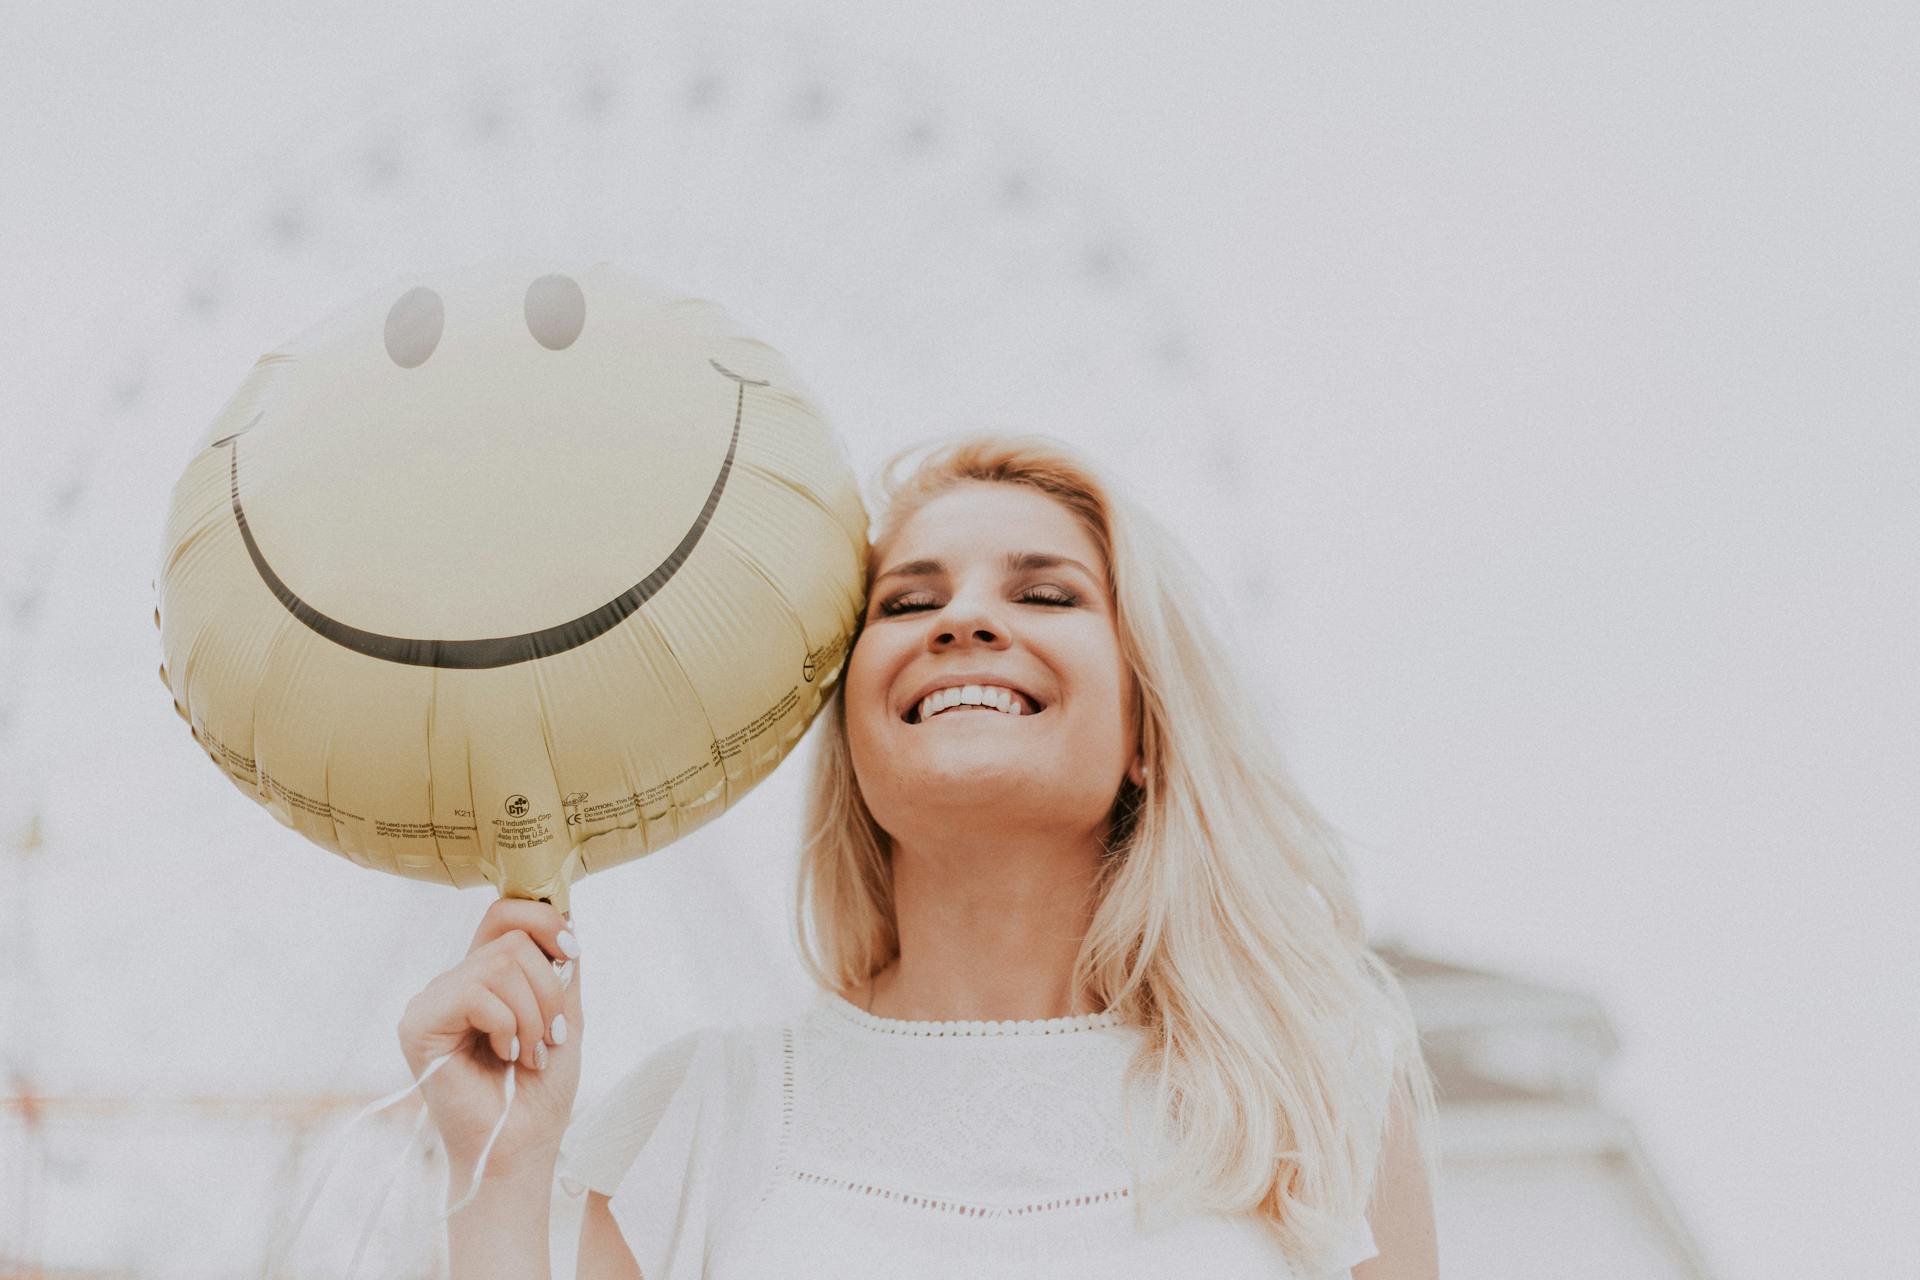 Frau hält lächelnd einen Luftballon | Quelle: Pexels